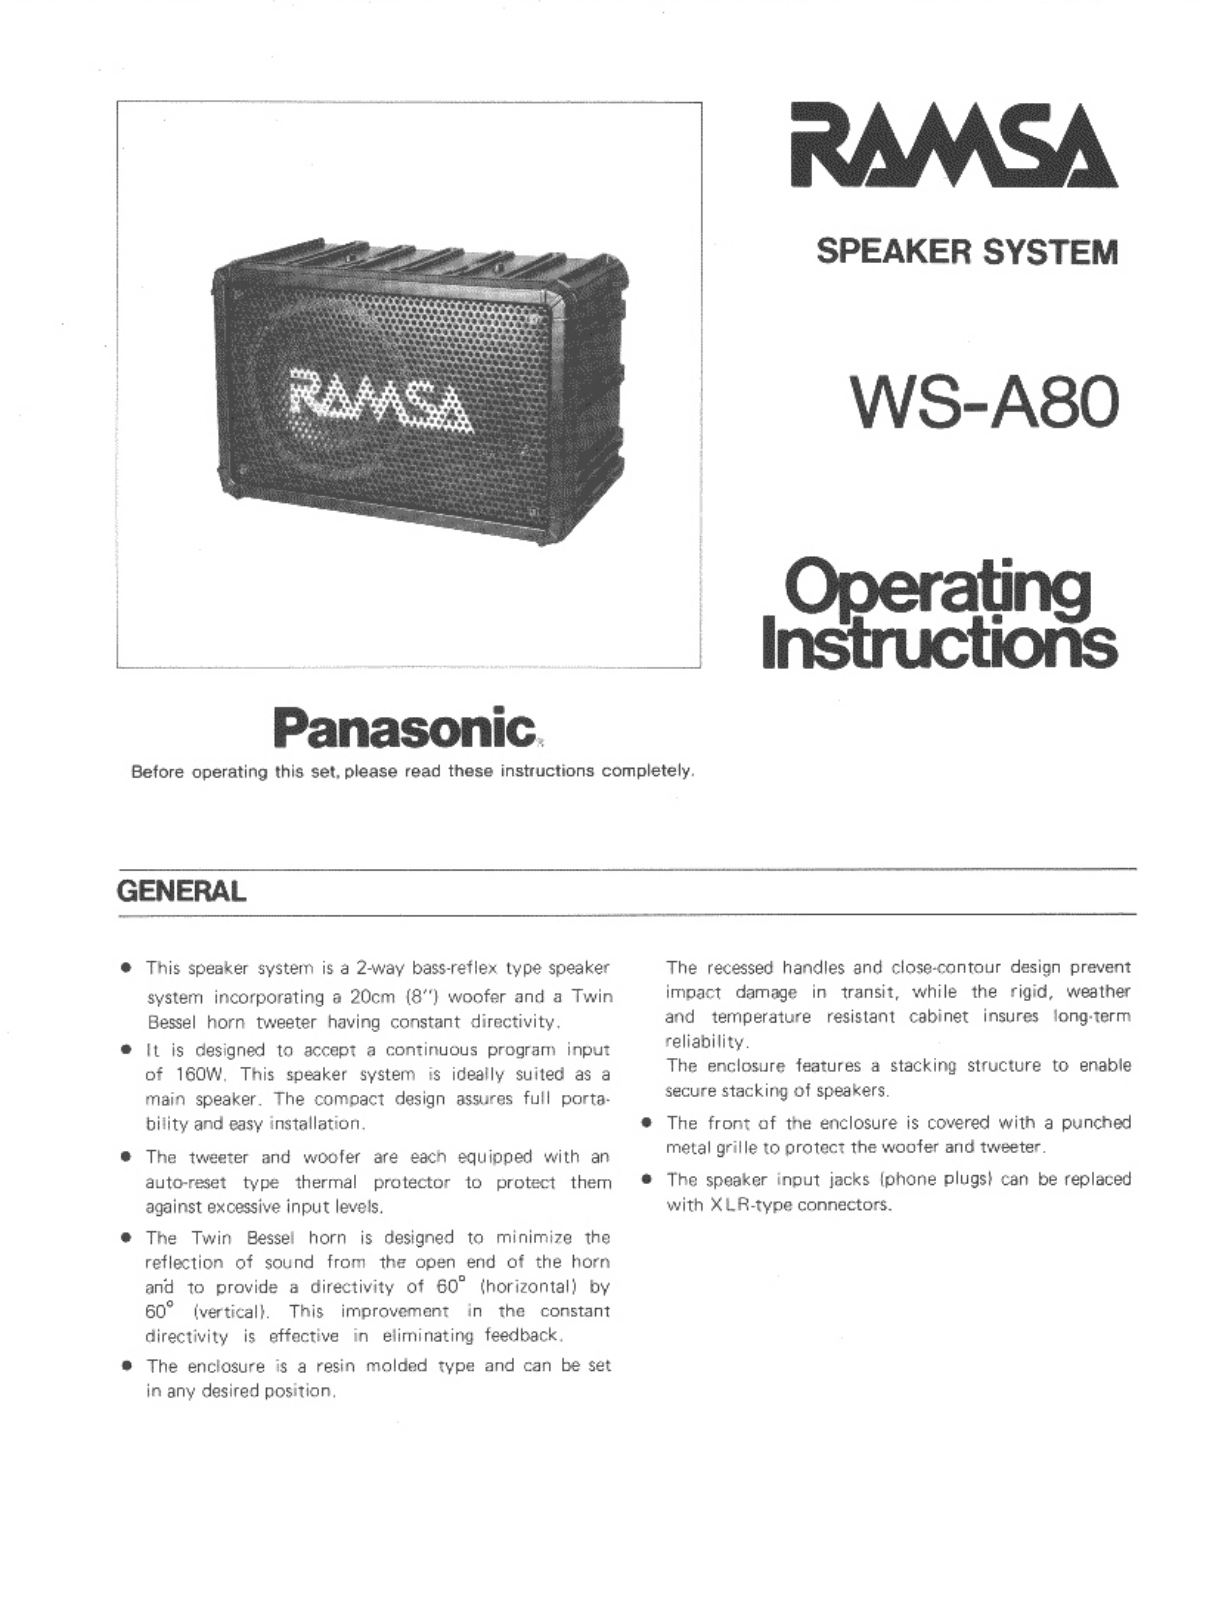 Panasonic ws-a80 Operation Manual